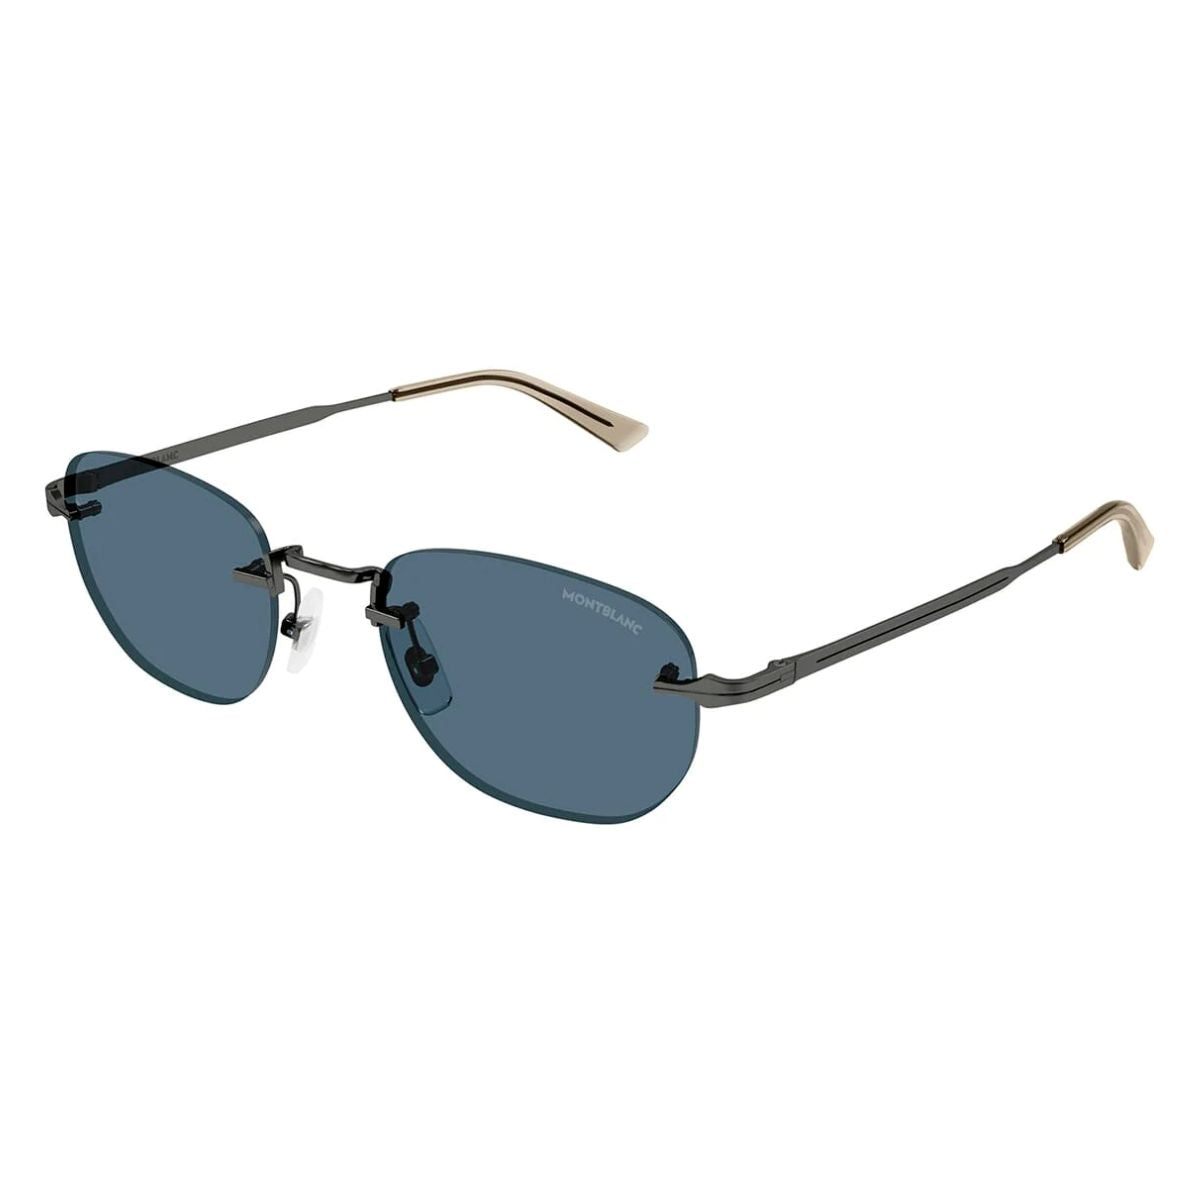 "Shop Stylish Mont Blanc Rimless Sunglasses For Mens At Optorium"